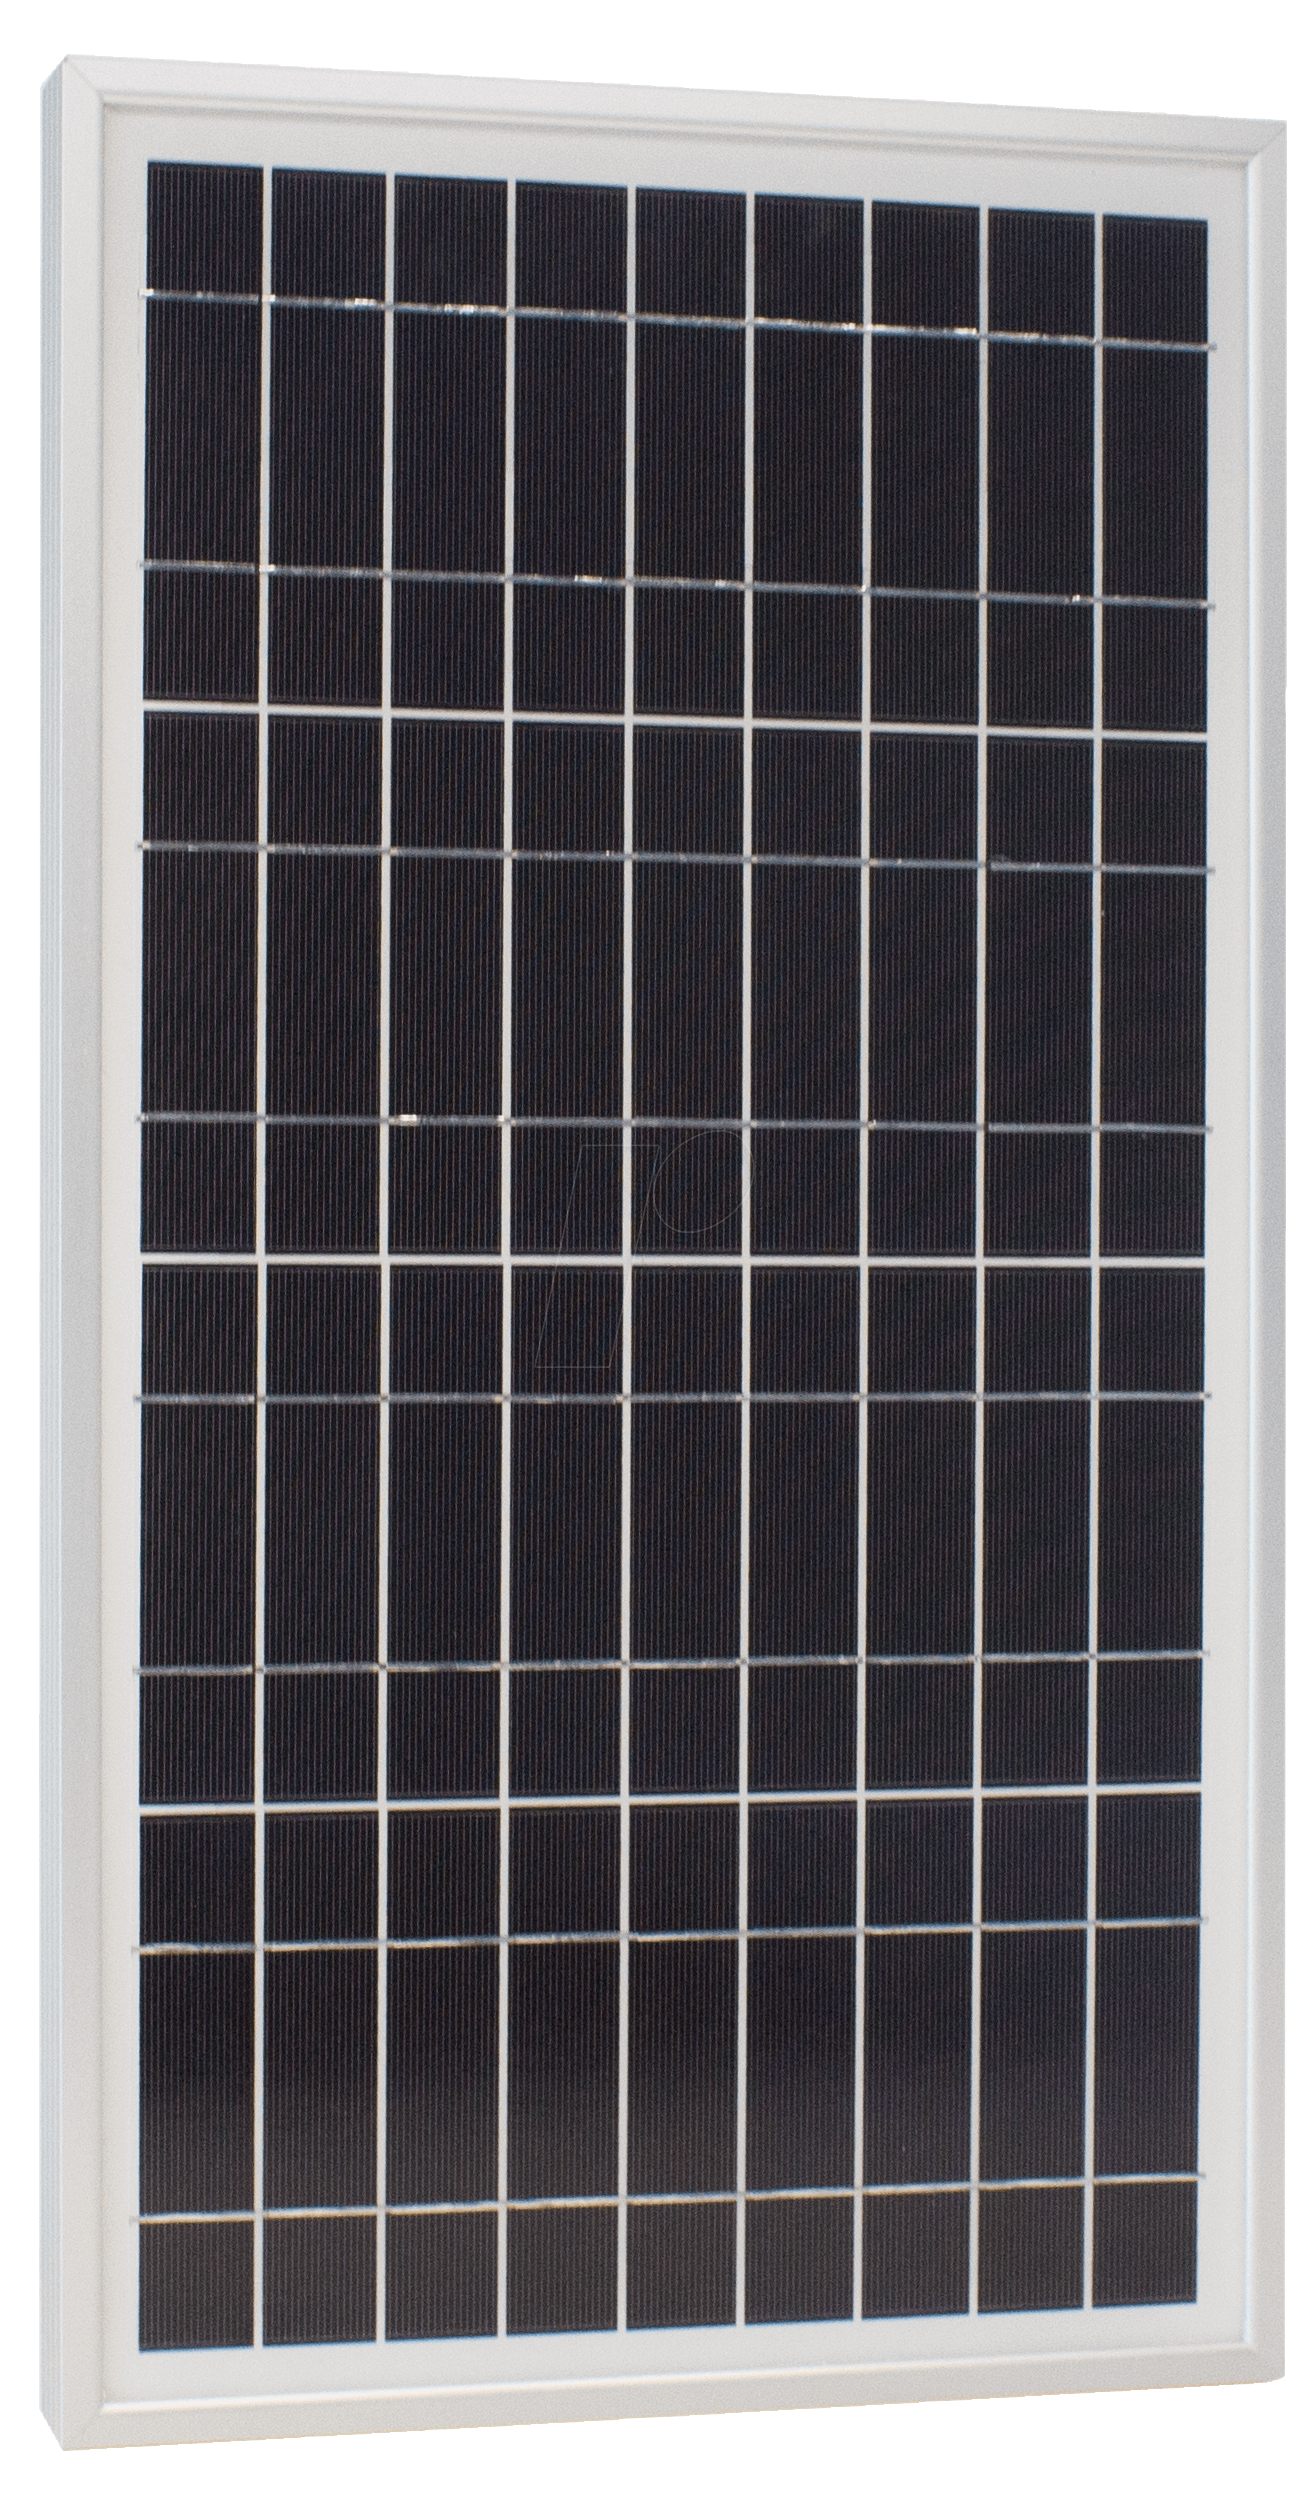 PHAE SP 20S - Solarpanel Sun Plus 20 S, 36 Zellen, 12 V, 20 W von PHAESUN